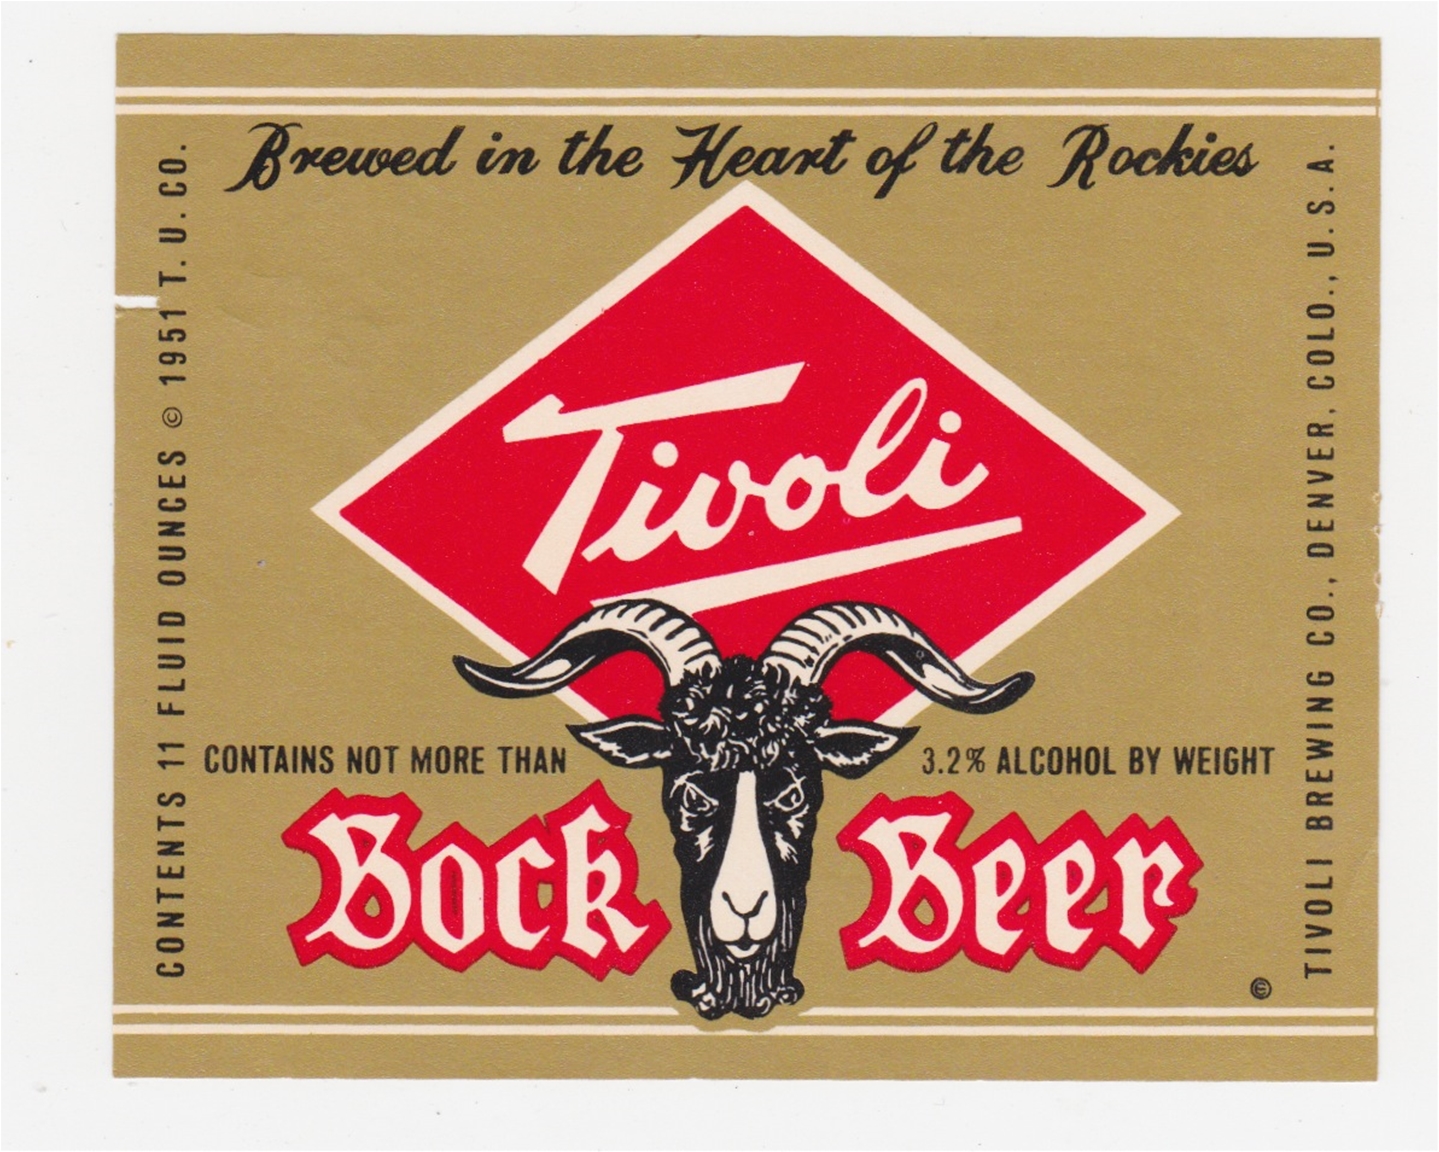 Tivoli Bock Beer Label